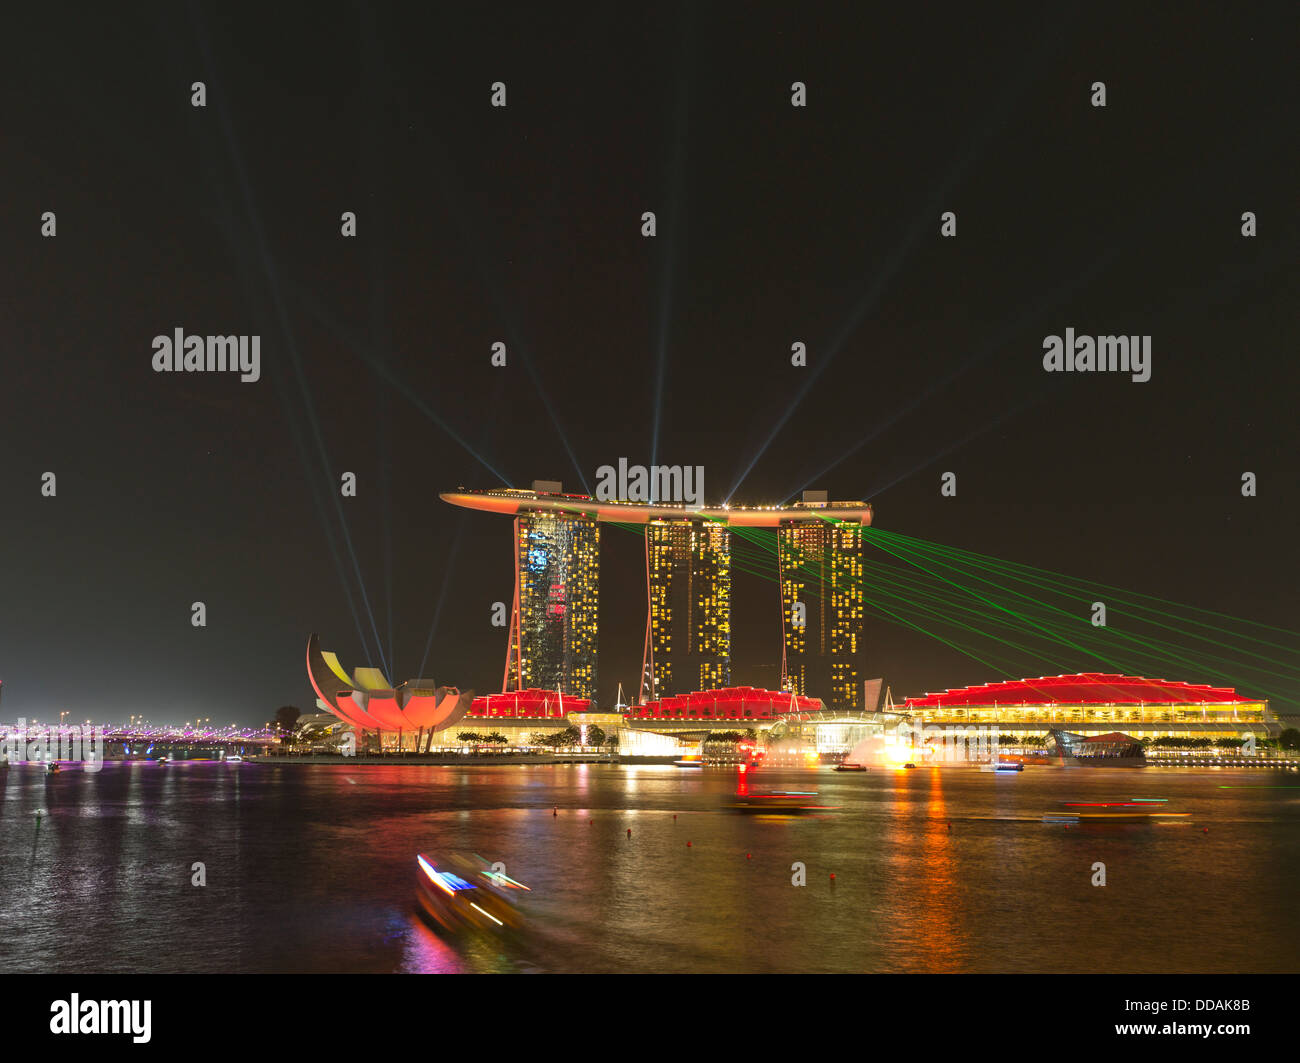 dh Laser light show MARINA BAY SINGAPORE Marina bay sands night evening lights display beams Stock Photo